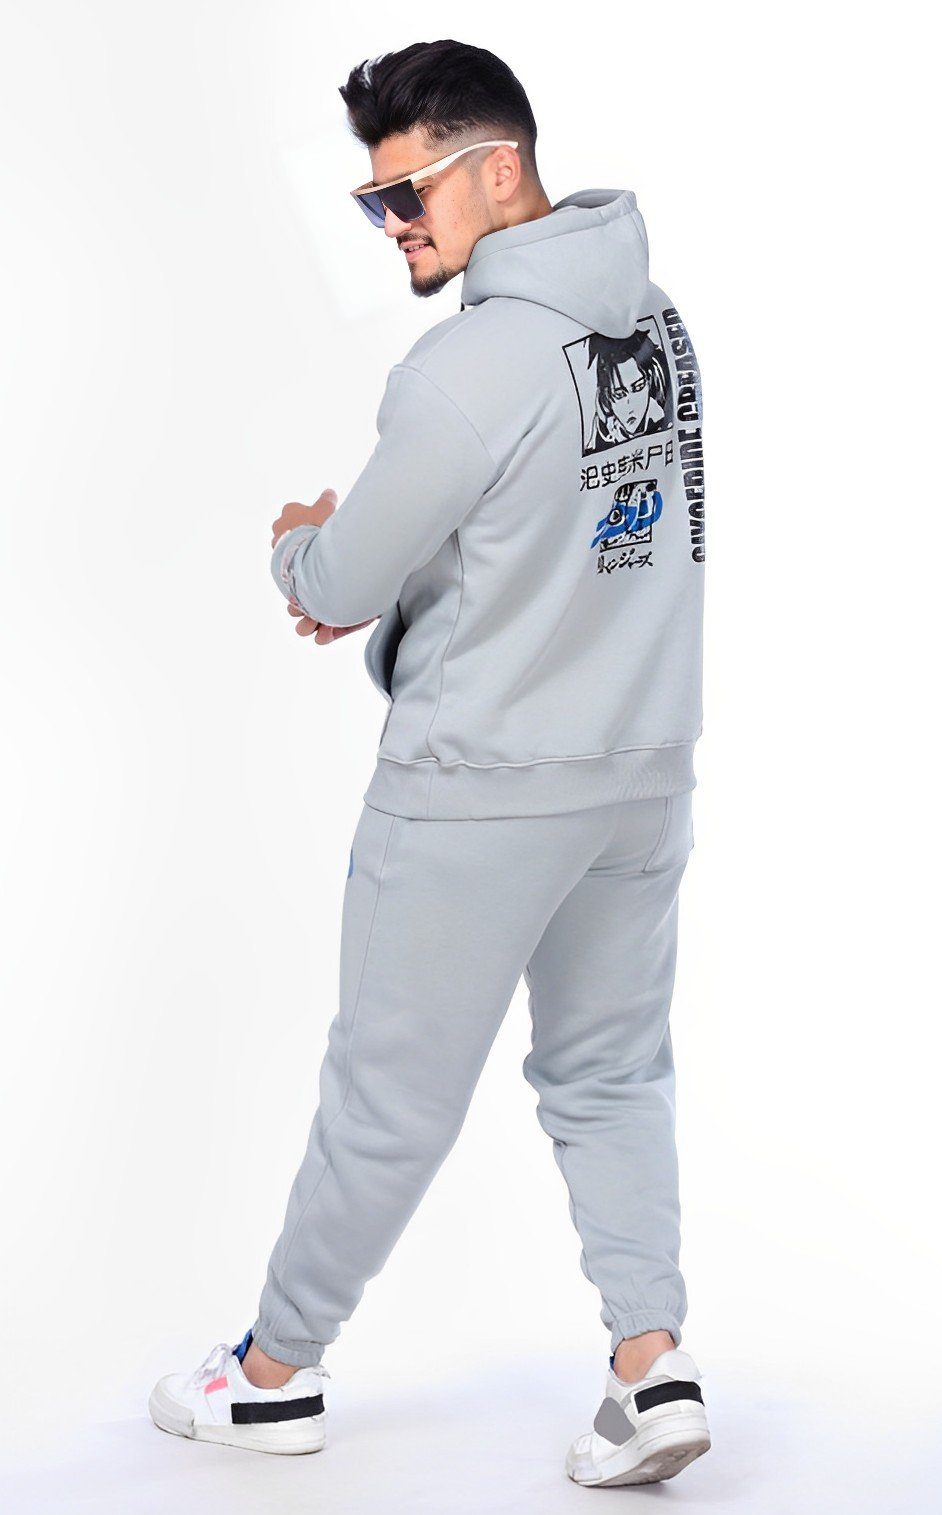 ALGINOO Trainingsanzug Trainingsanzug, aus reiner Grau Baumwolle